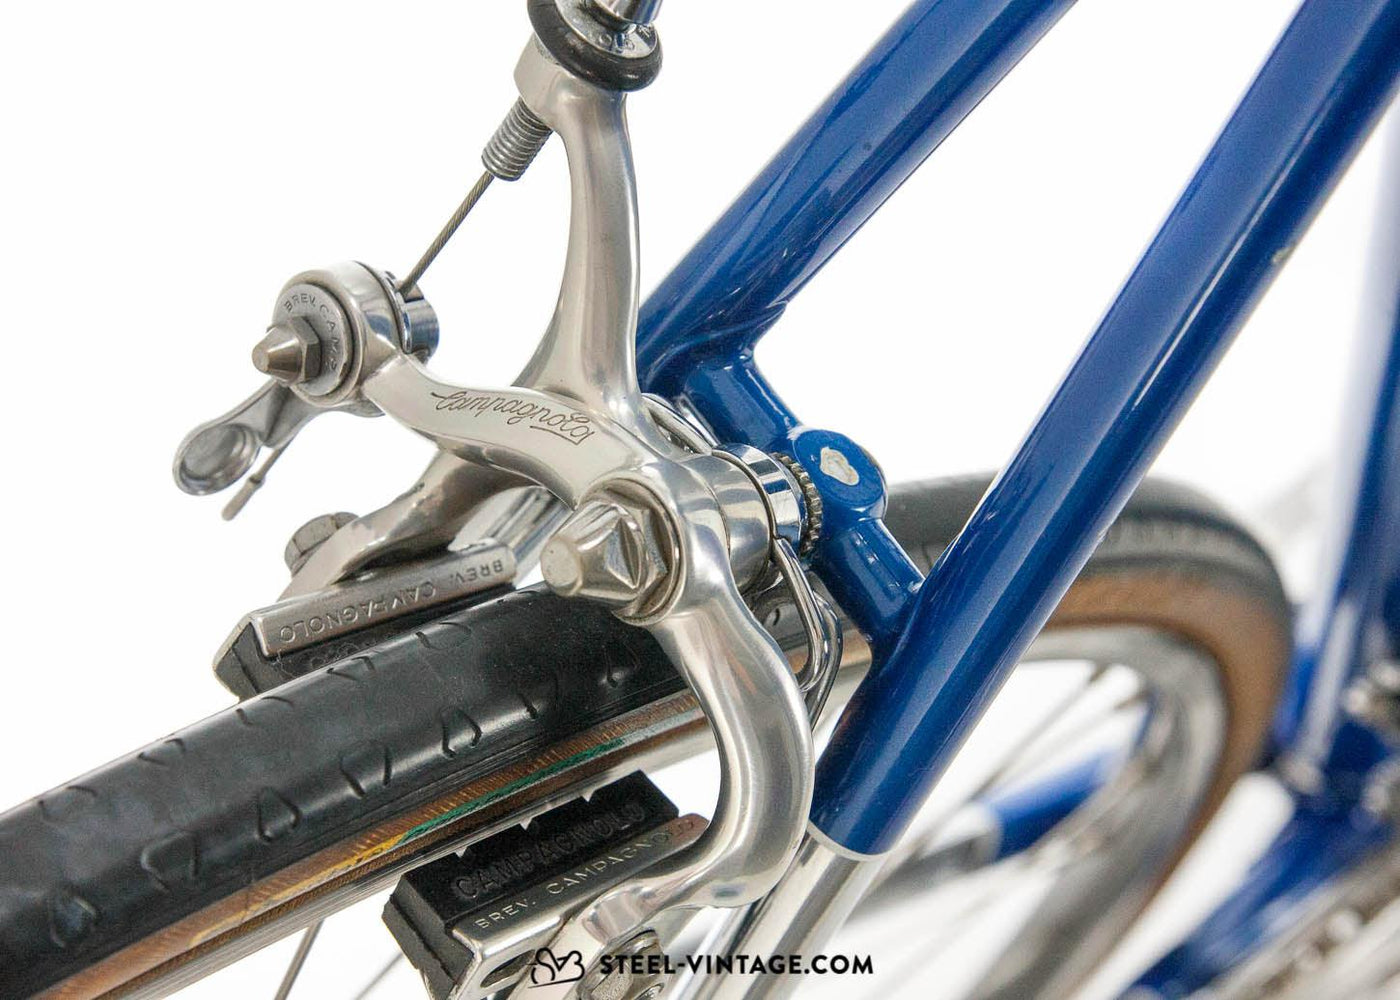 De Rosa Signatura Classic Eroica Bike - Steel Vintage Bikes